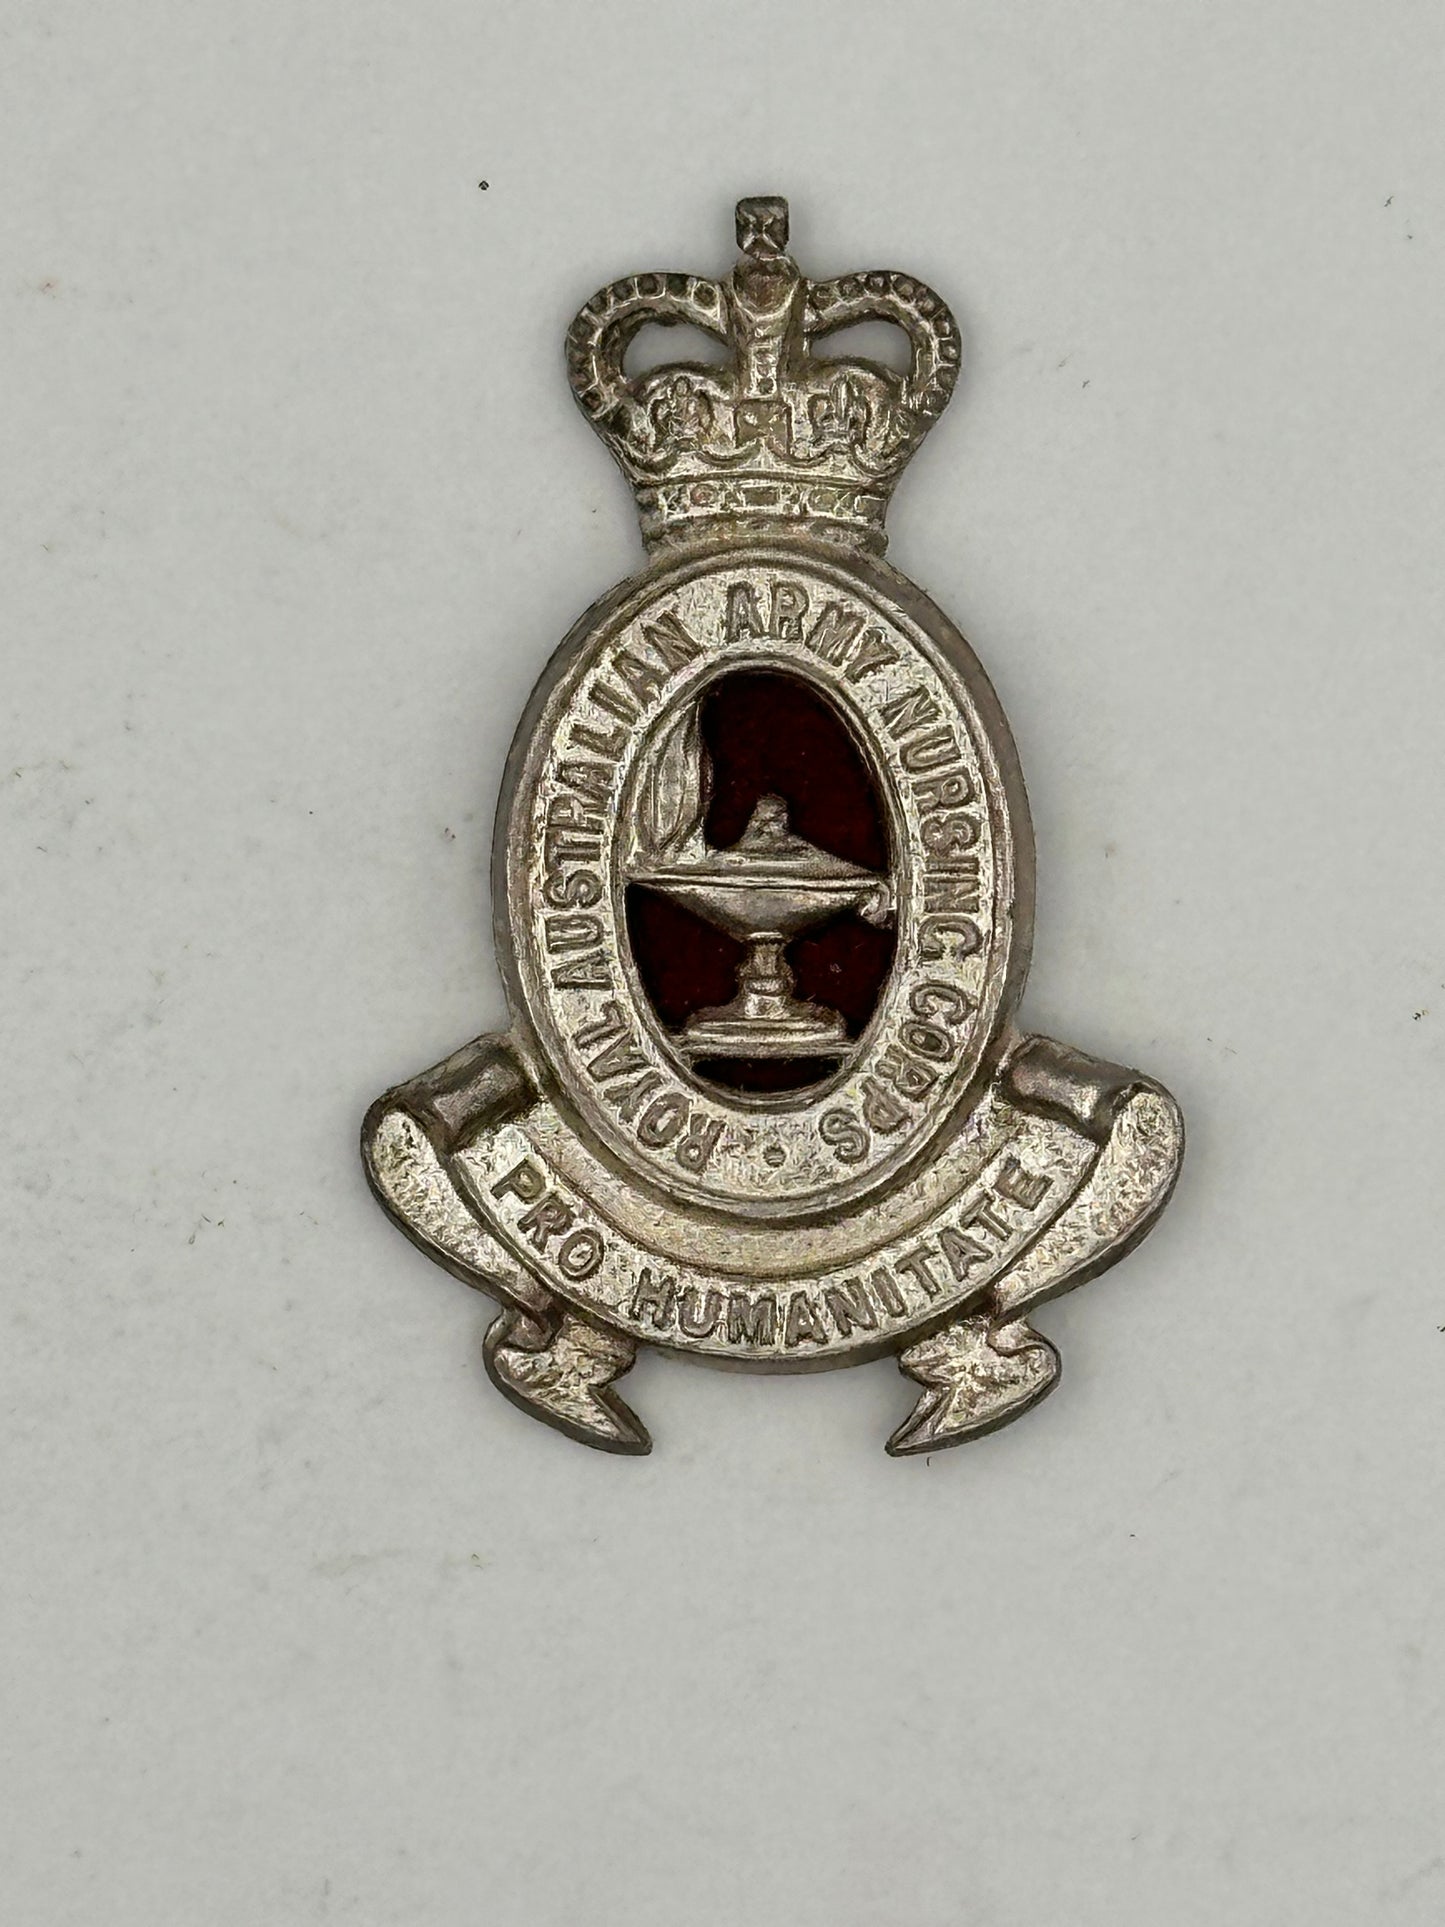 Vintage Royal Australian Army Nursing Corps Collar Badge